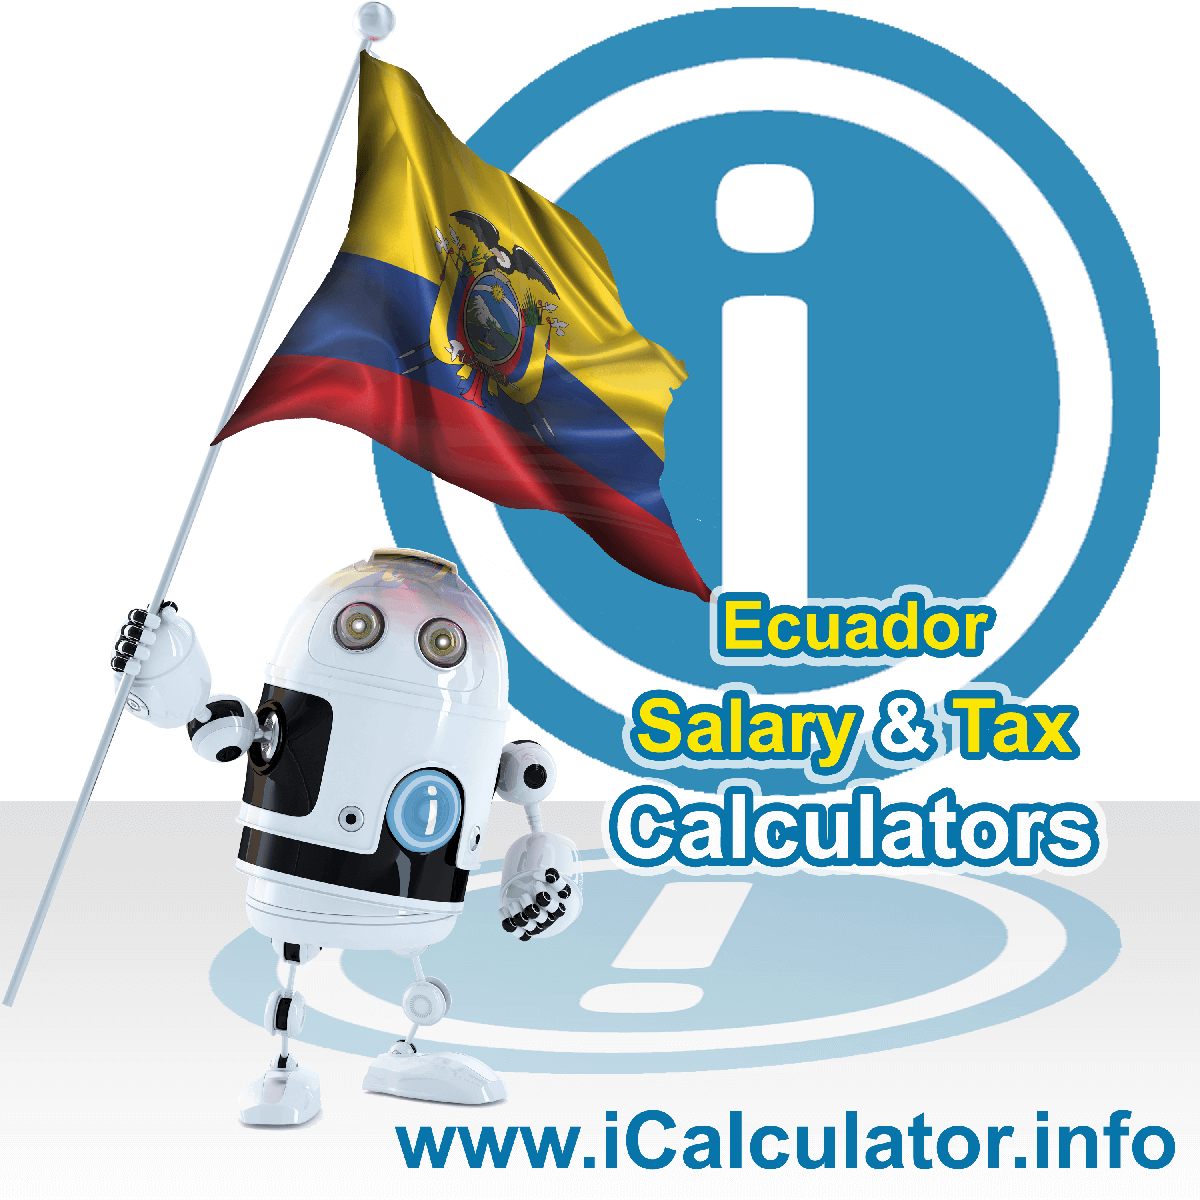 Ecuador Salary Calculator. This image shows the Ecuadorese flag and information relating to the tax formula for the Ecuador Tax Calculator